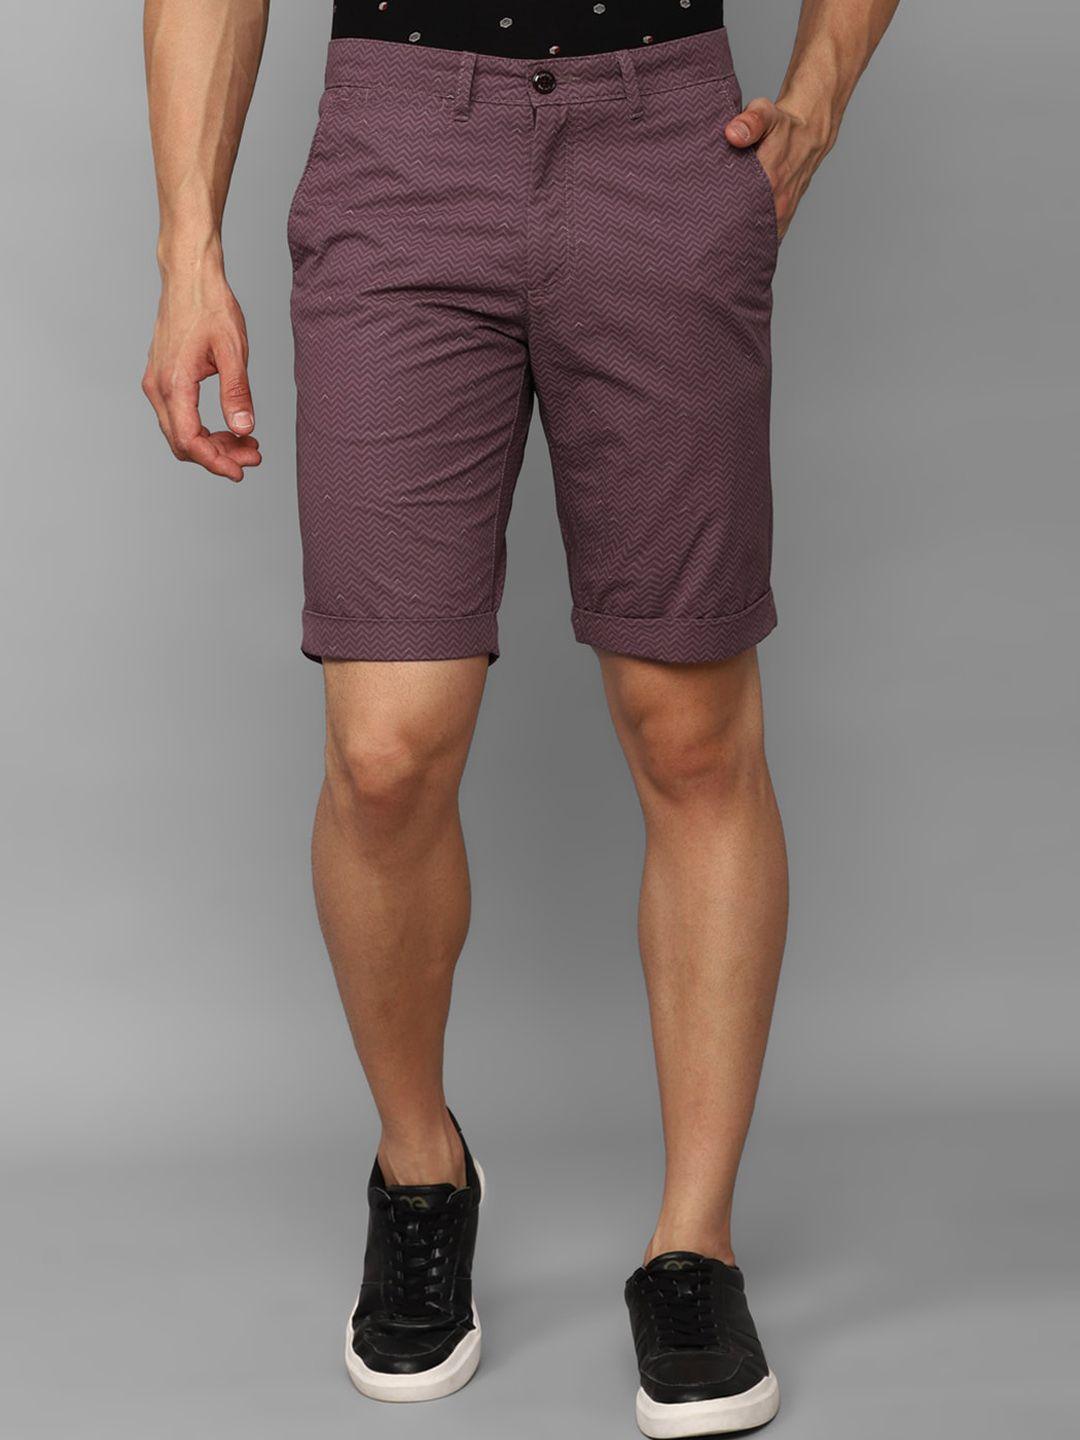 allen solly men chevron printed slim fit pure cotton shorts